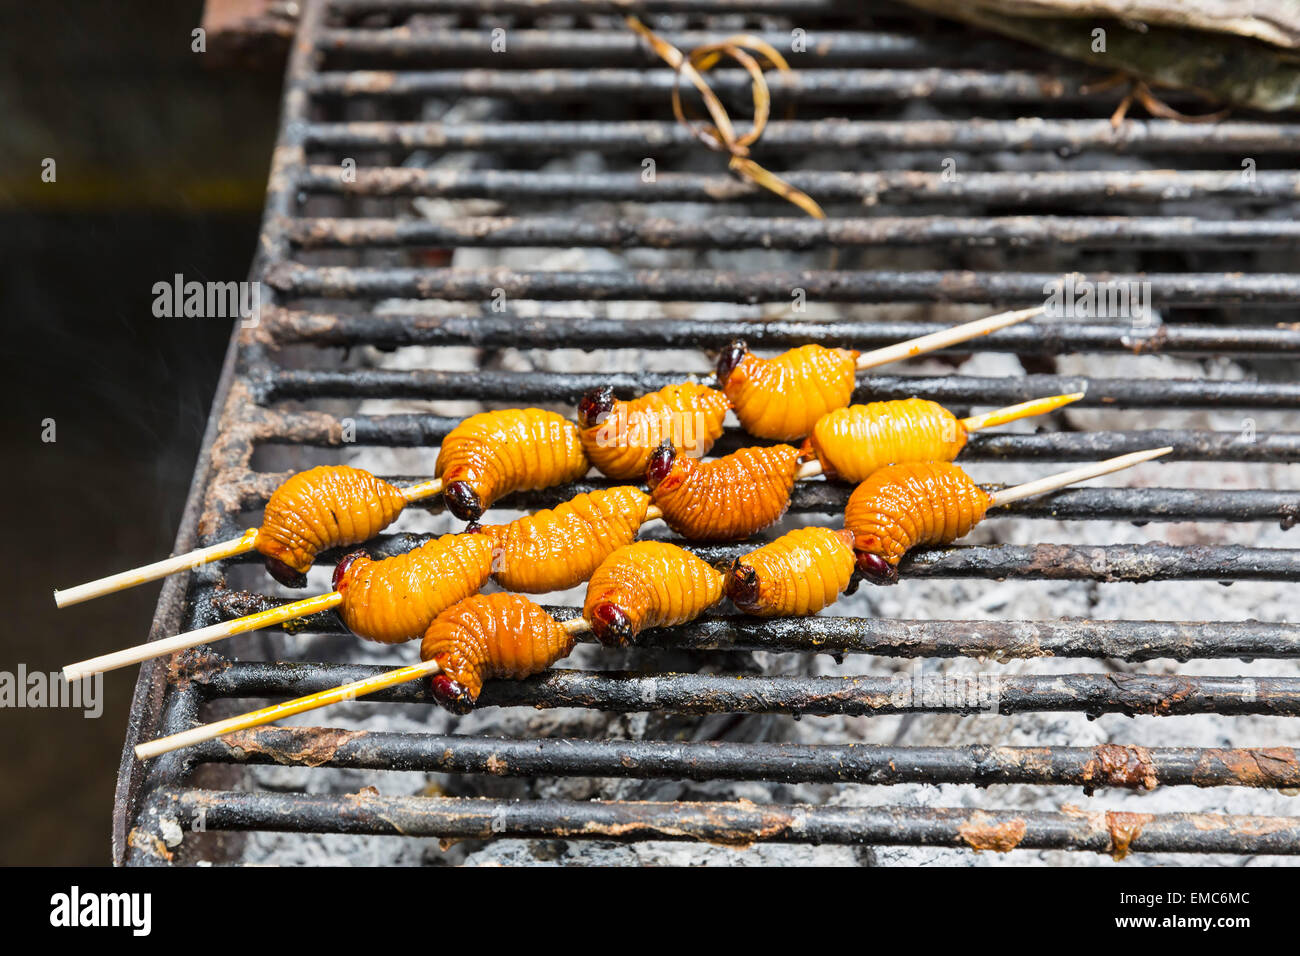 Ecuador, Puerto Francisco de Orellana, grilled larva of trunk beetle Stock Photo